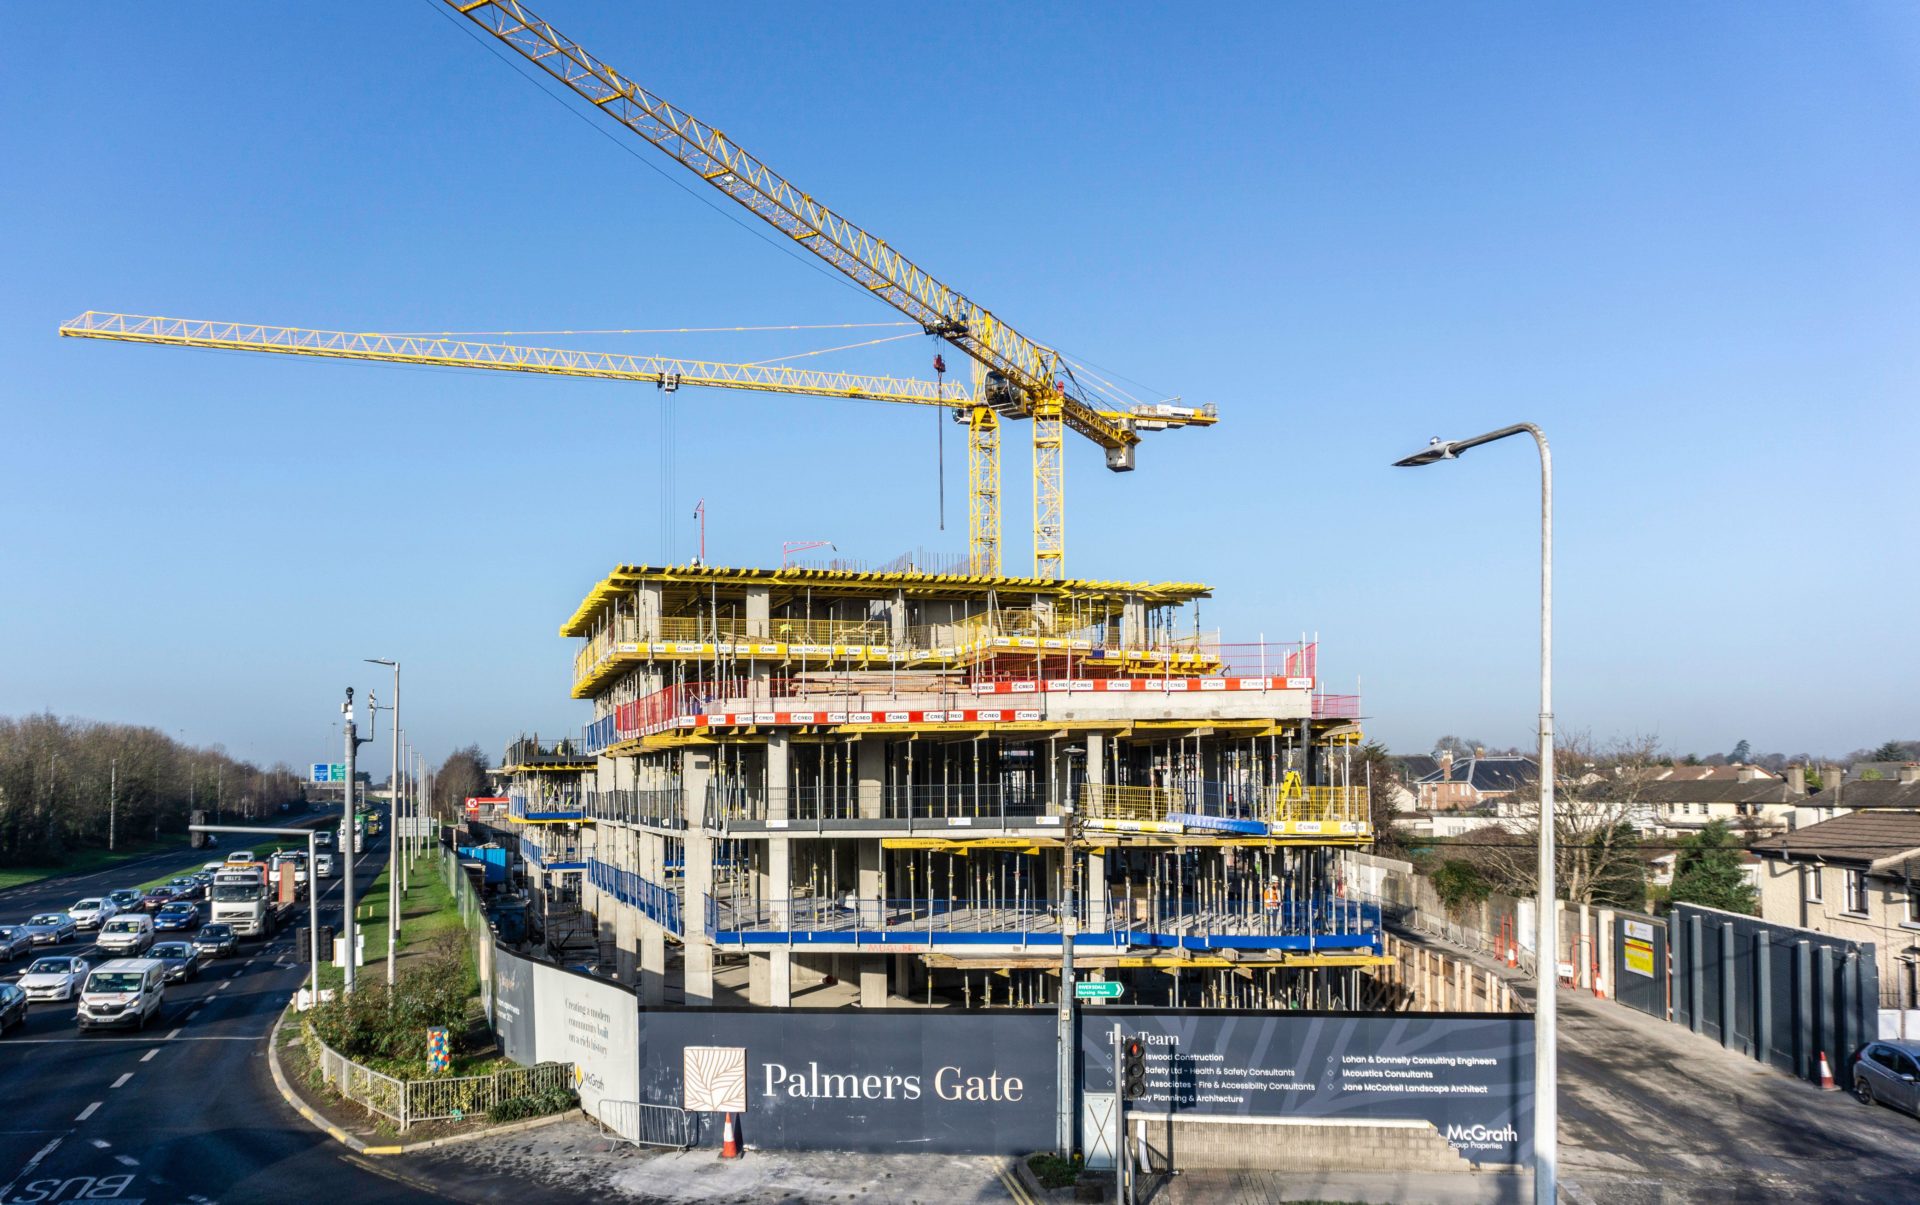 An apartment building under construction in Palmerstown, Dublin, Ireland.